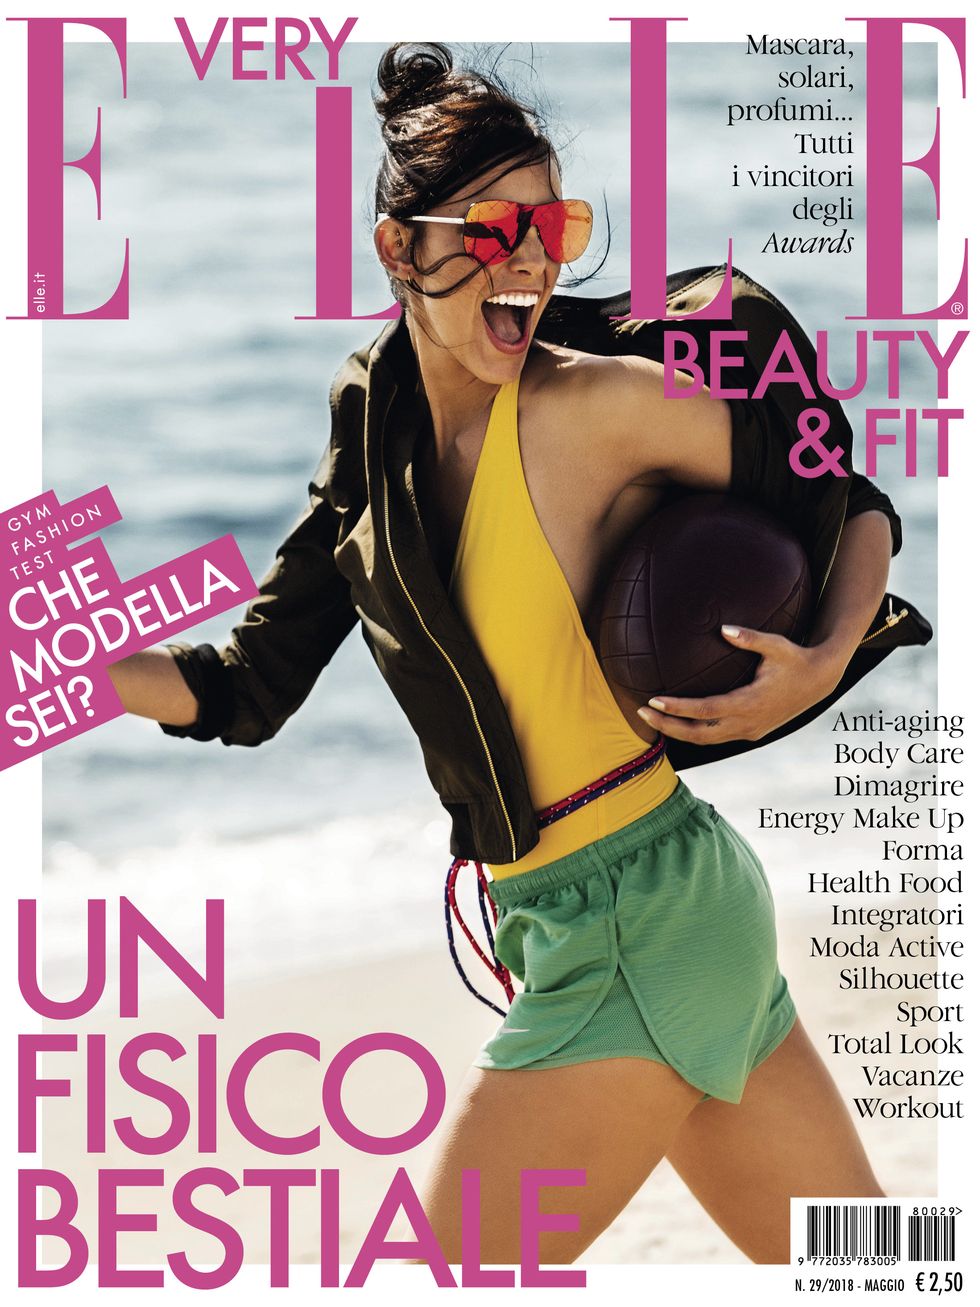 Magazine, Pink, Poster, Muscle, Eyewear, Publication, Advertising, Glasses, Thigh, 